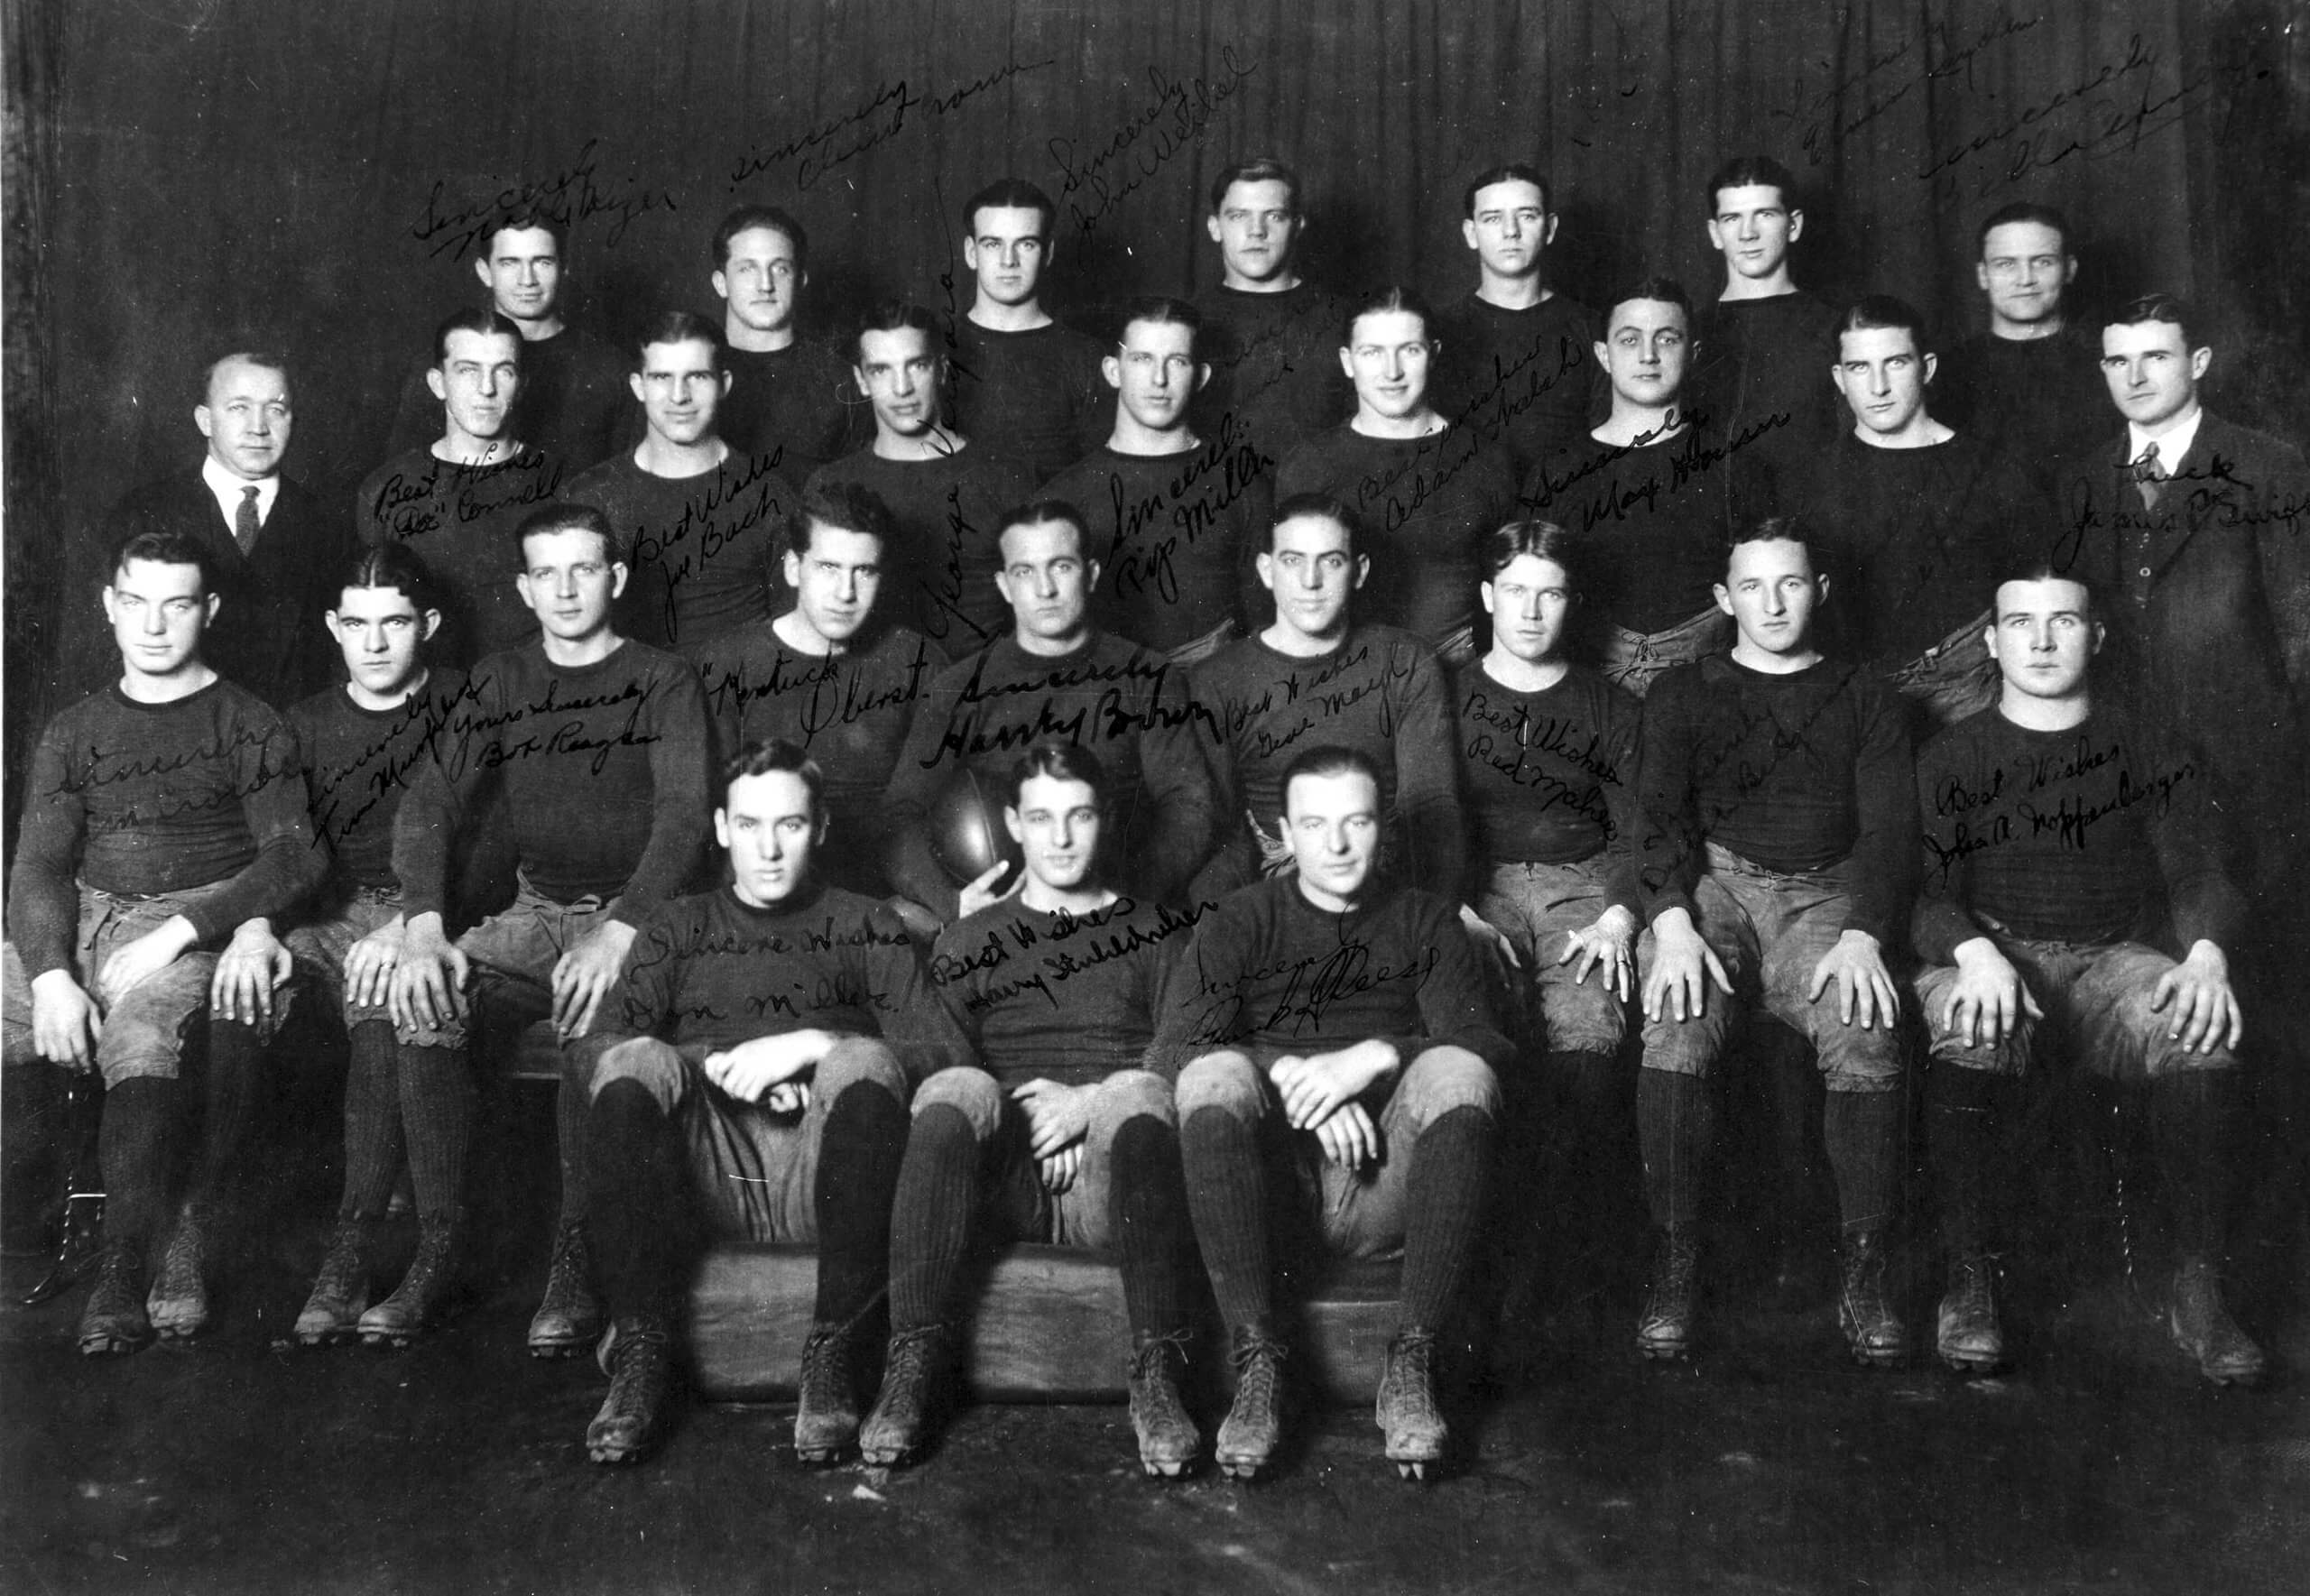 Notre_dame_football_team_1924